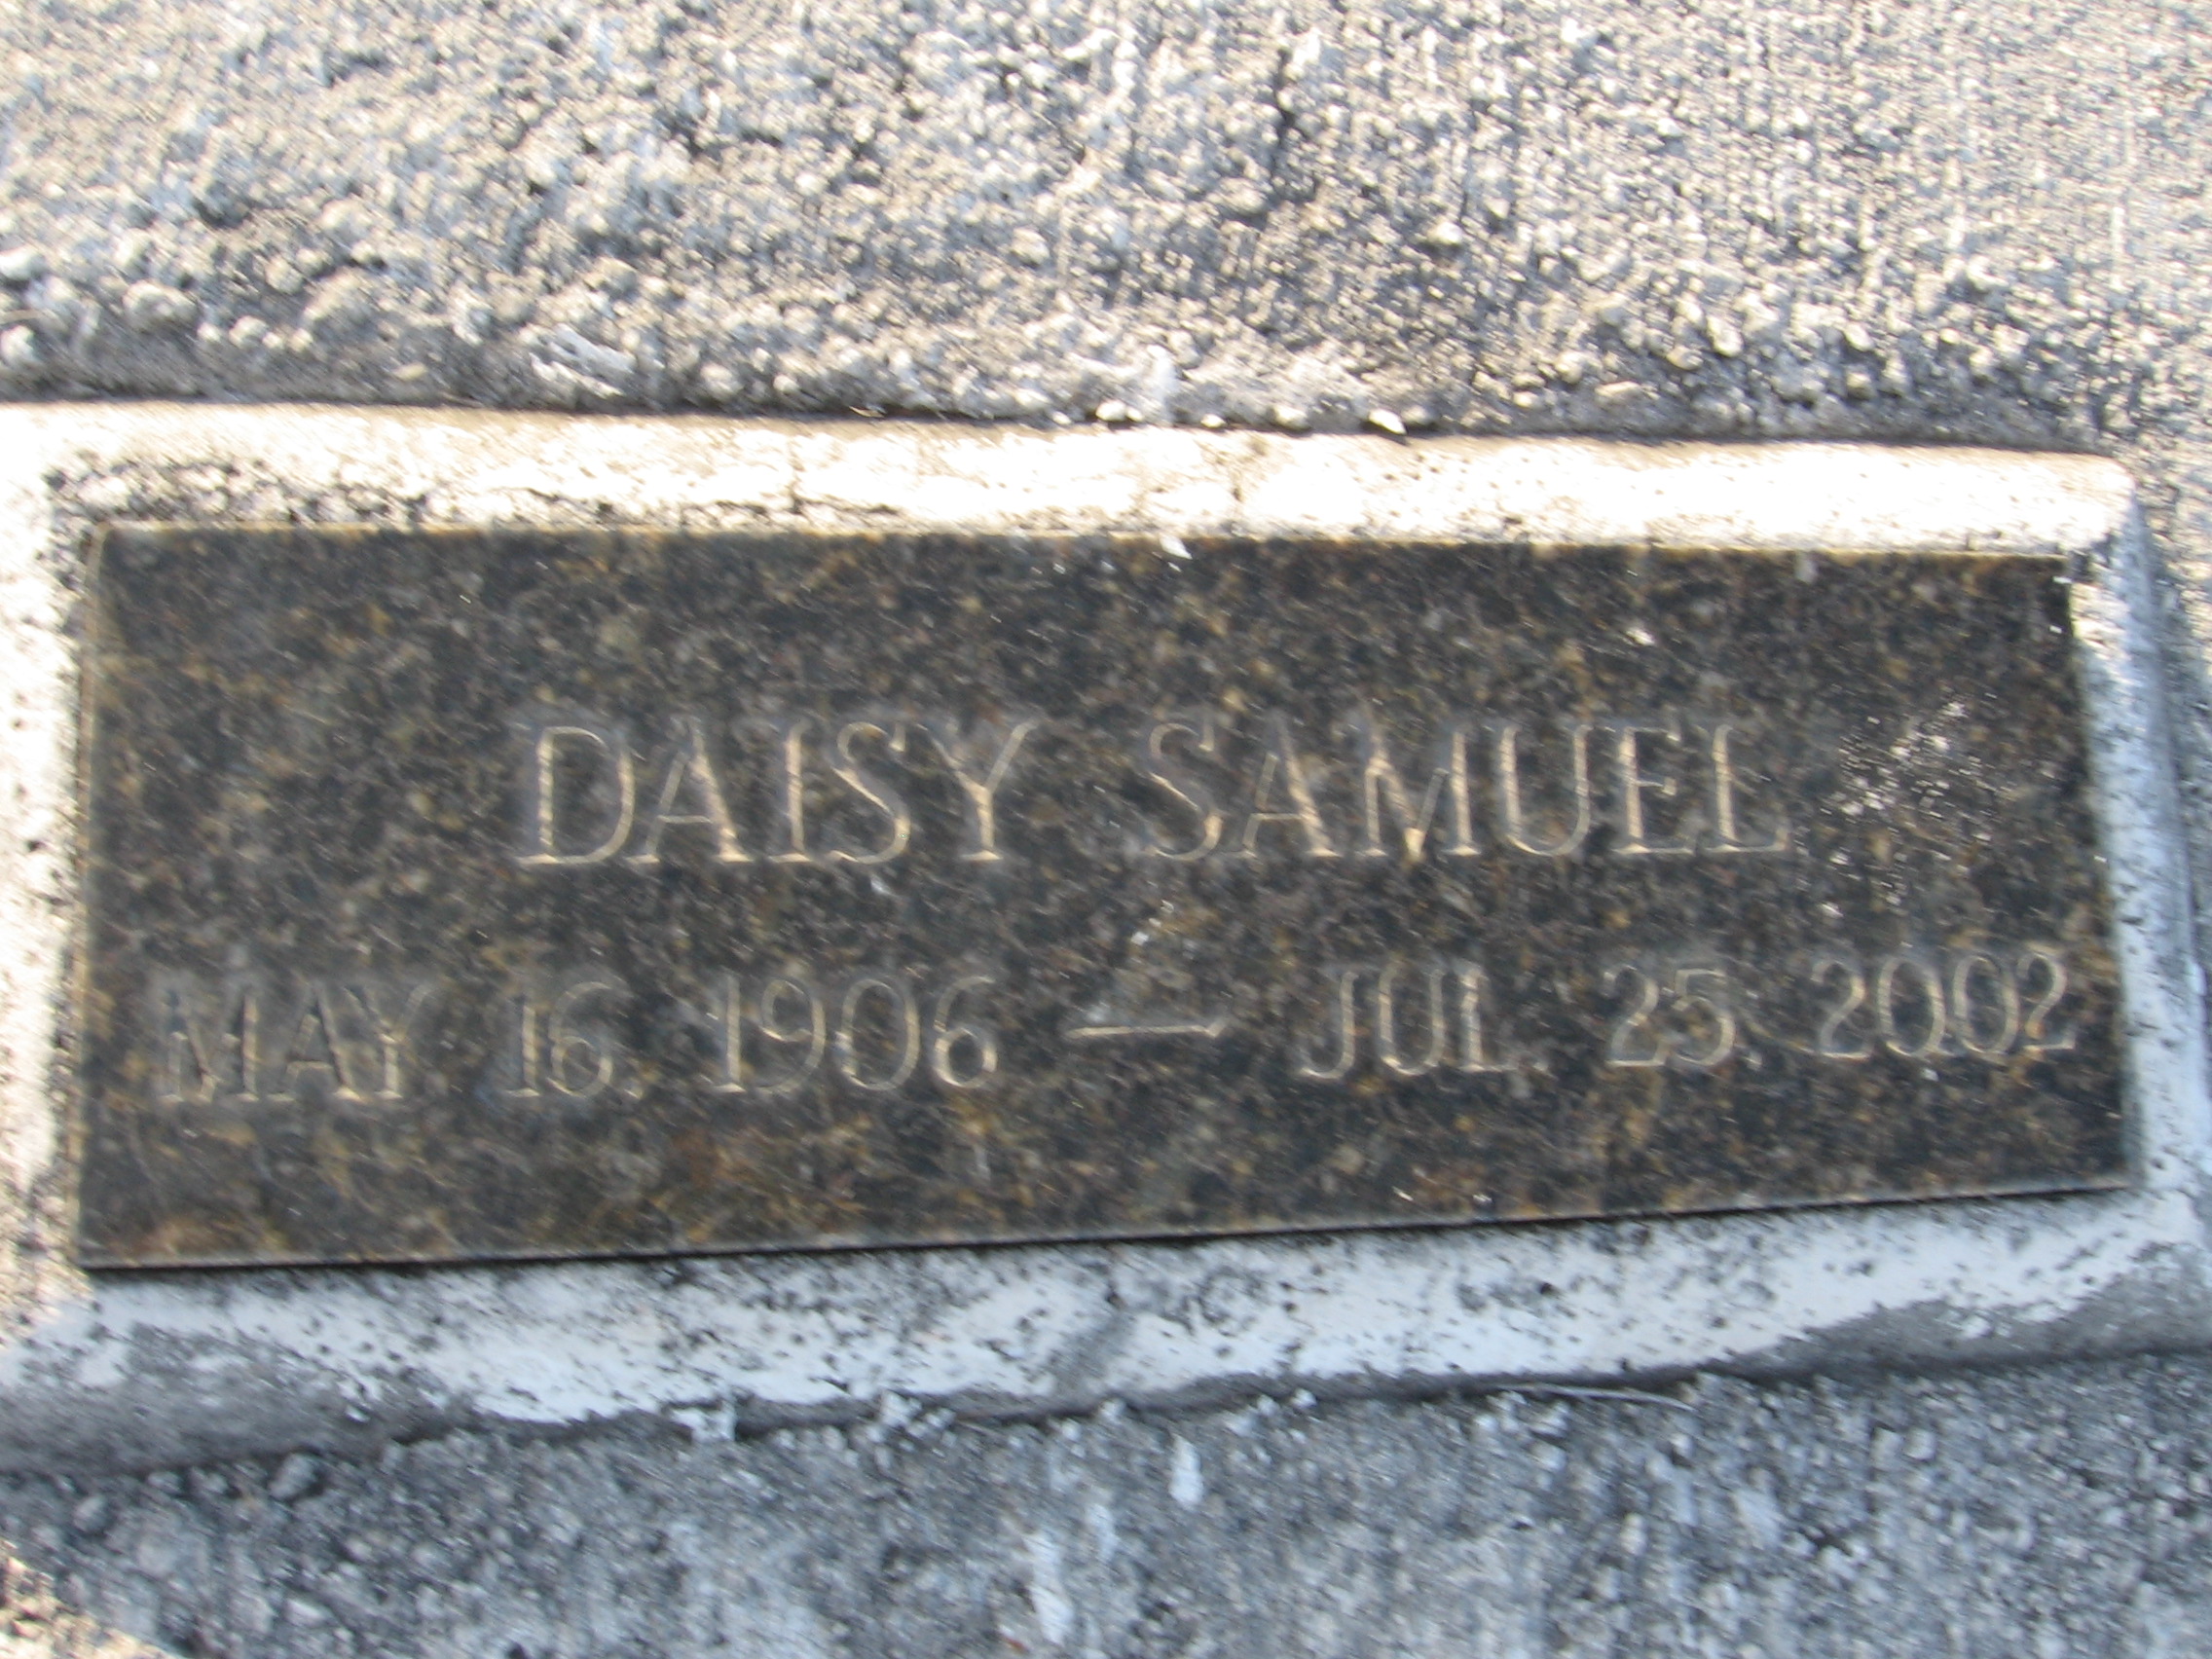 Daisy Samuel